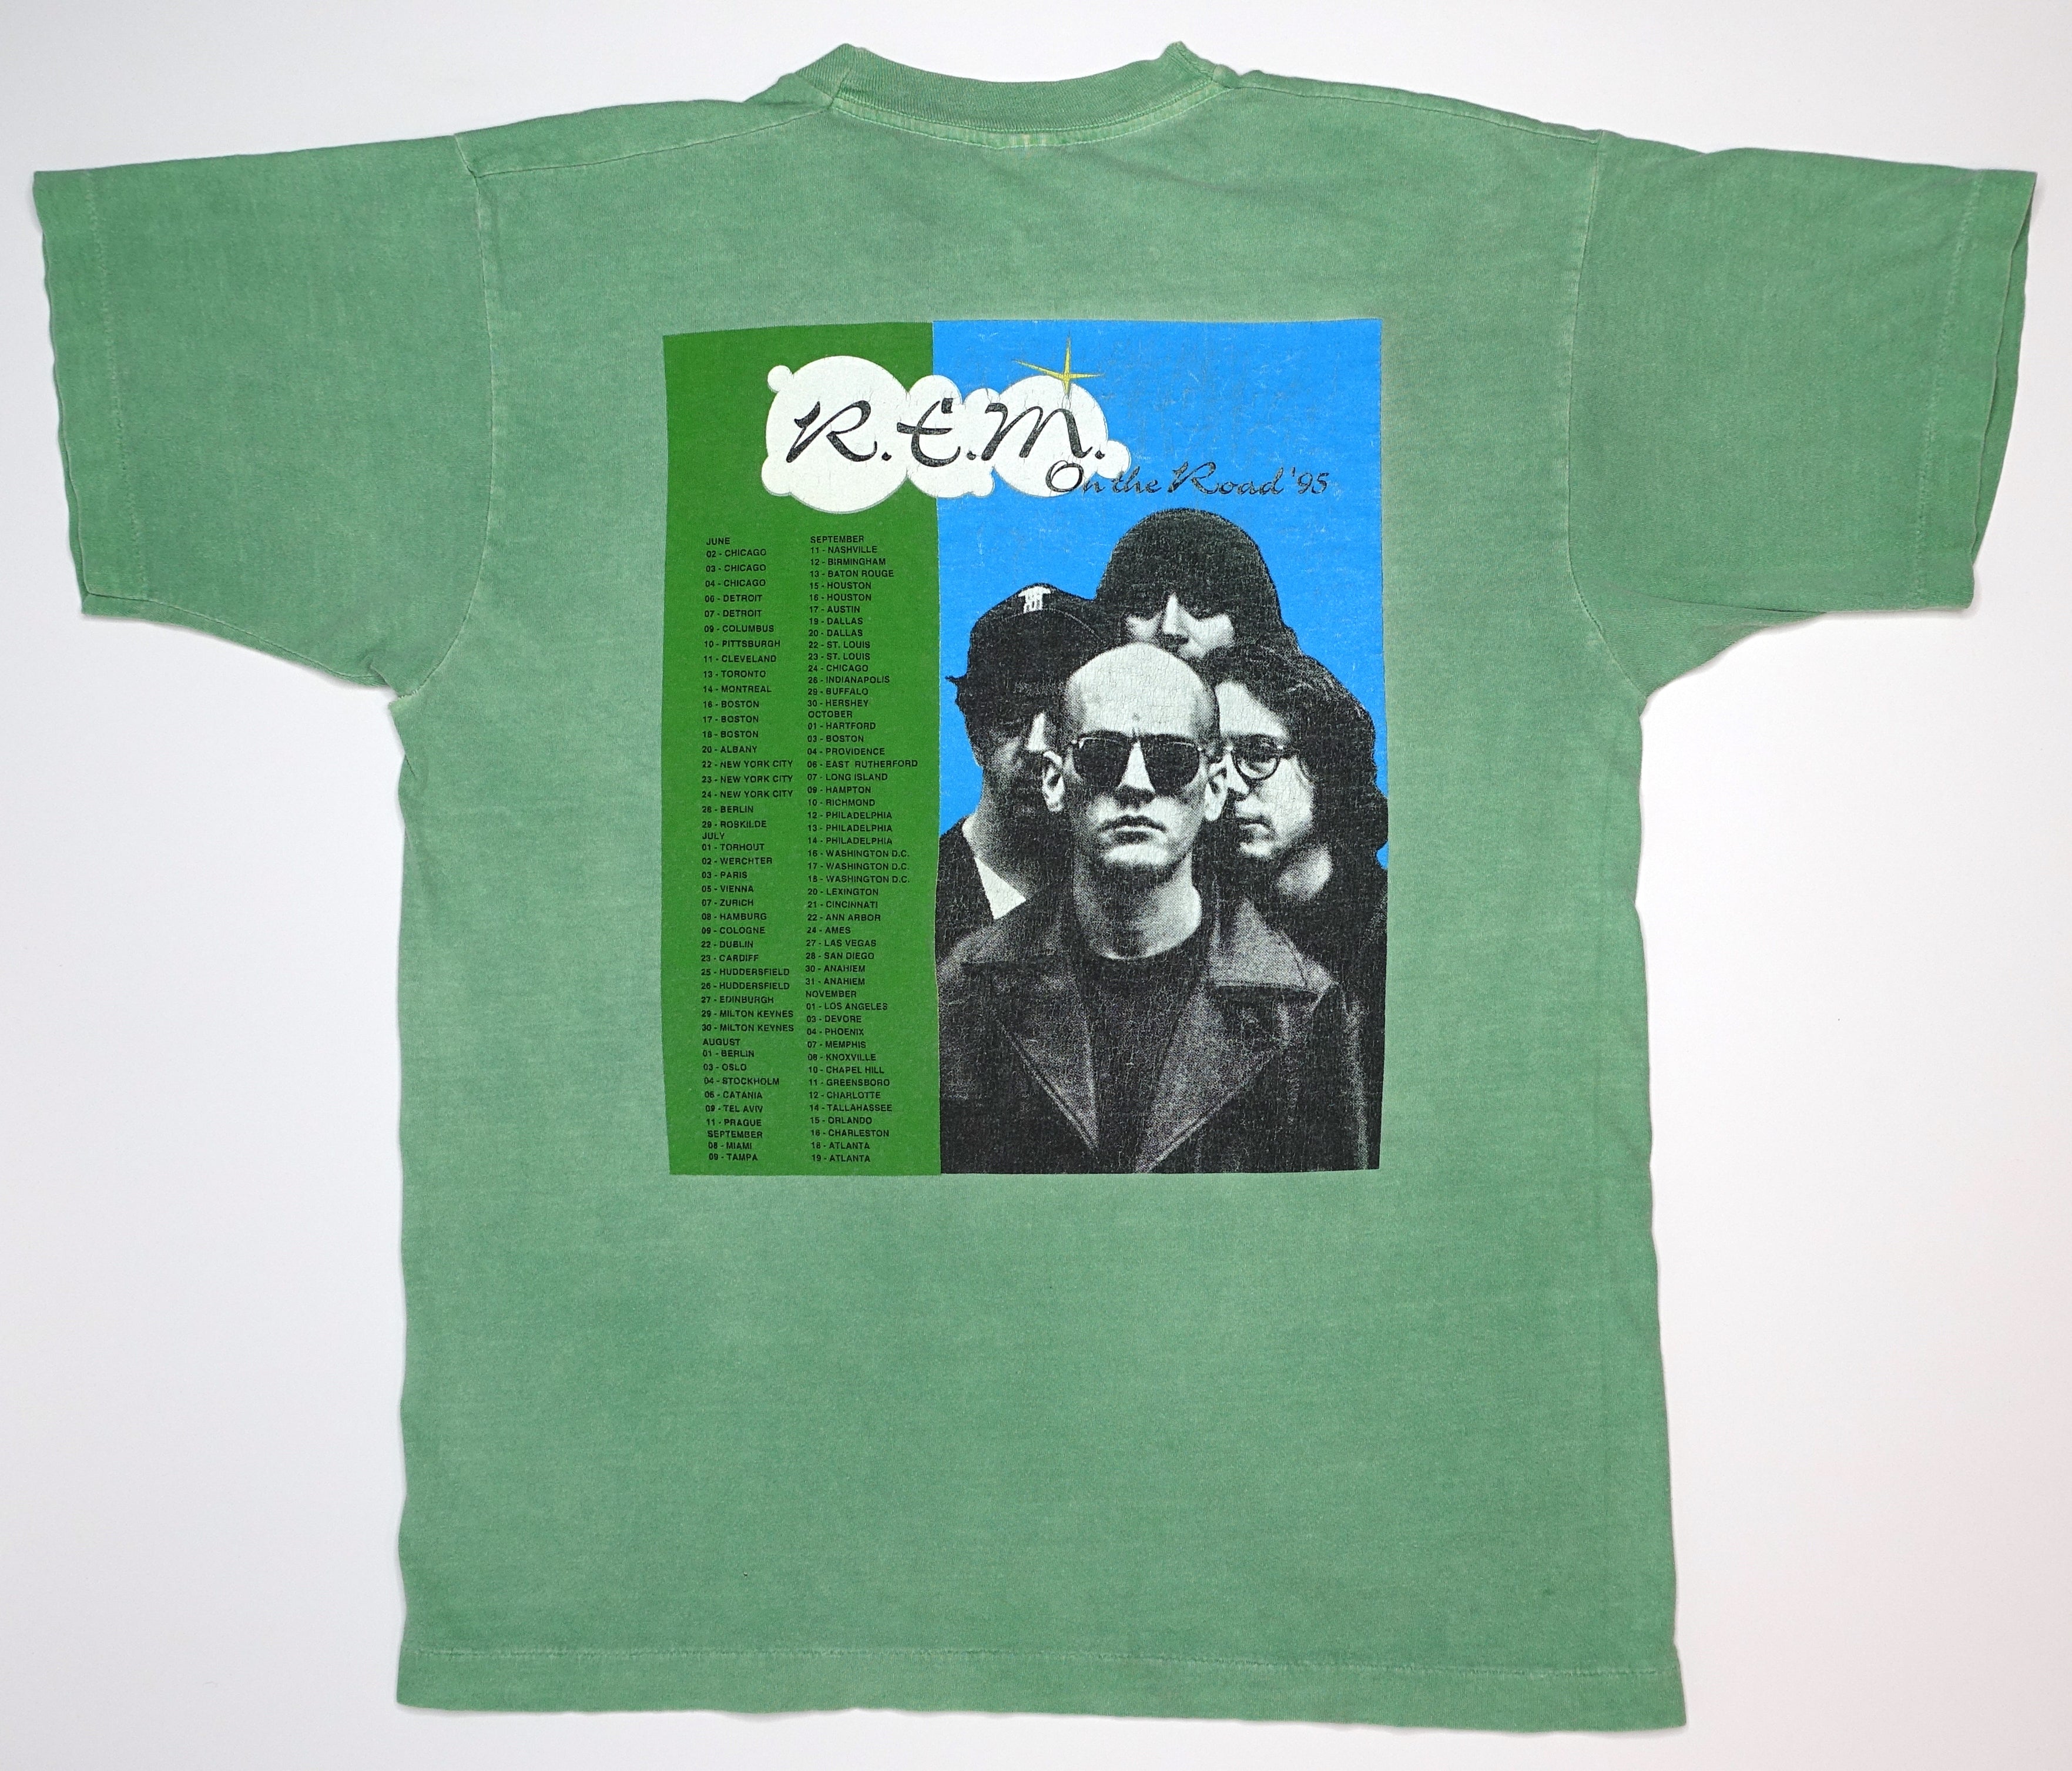 R.E.M. – New Sights, New Noise 1995 World Tour Shirt Size XL